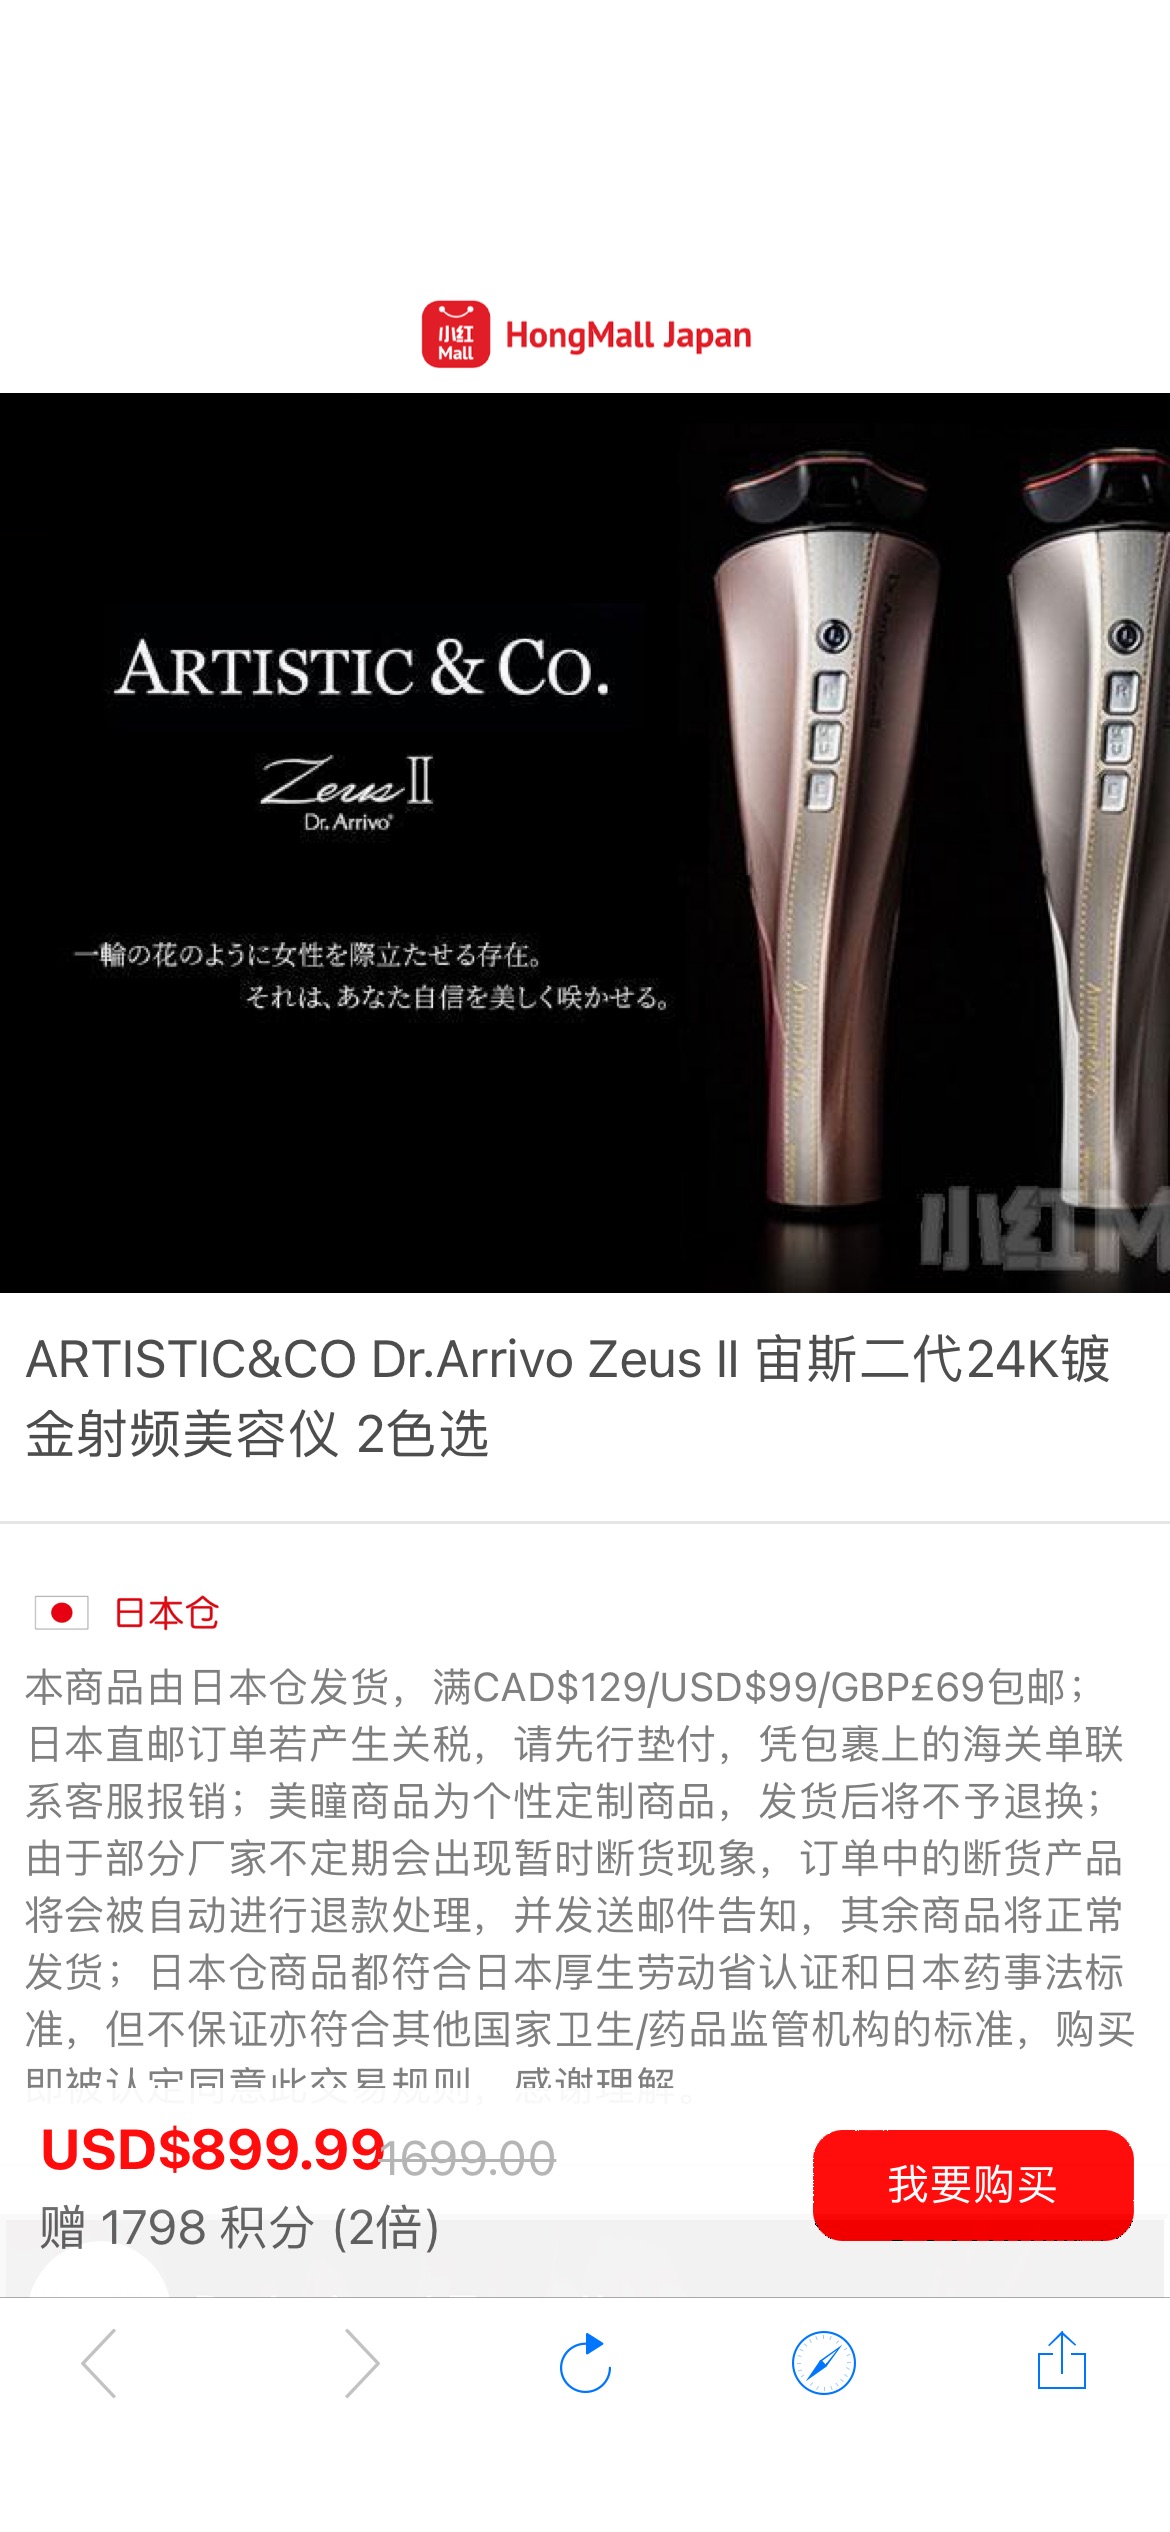 ARTISTIC&CO Dr.Arrivo Zeus Ⅱ 宙斯二代24K镀金射频美容仪 2色选